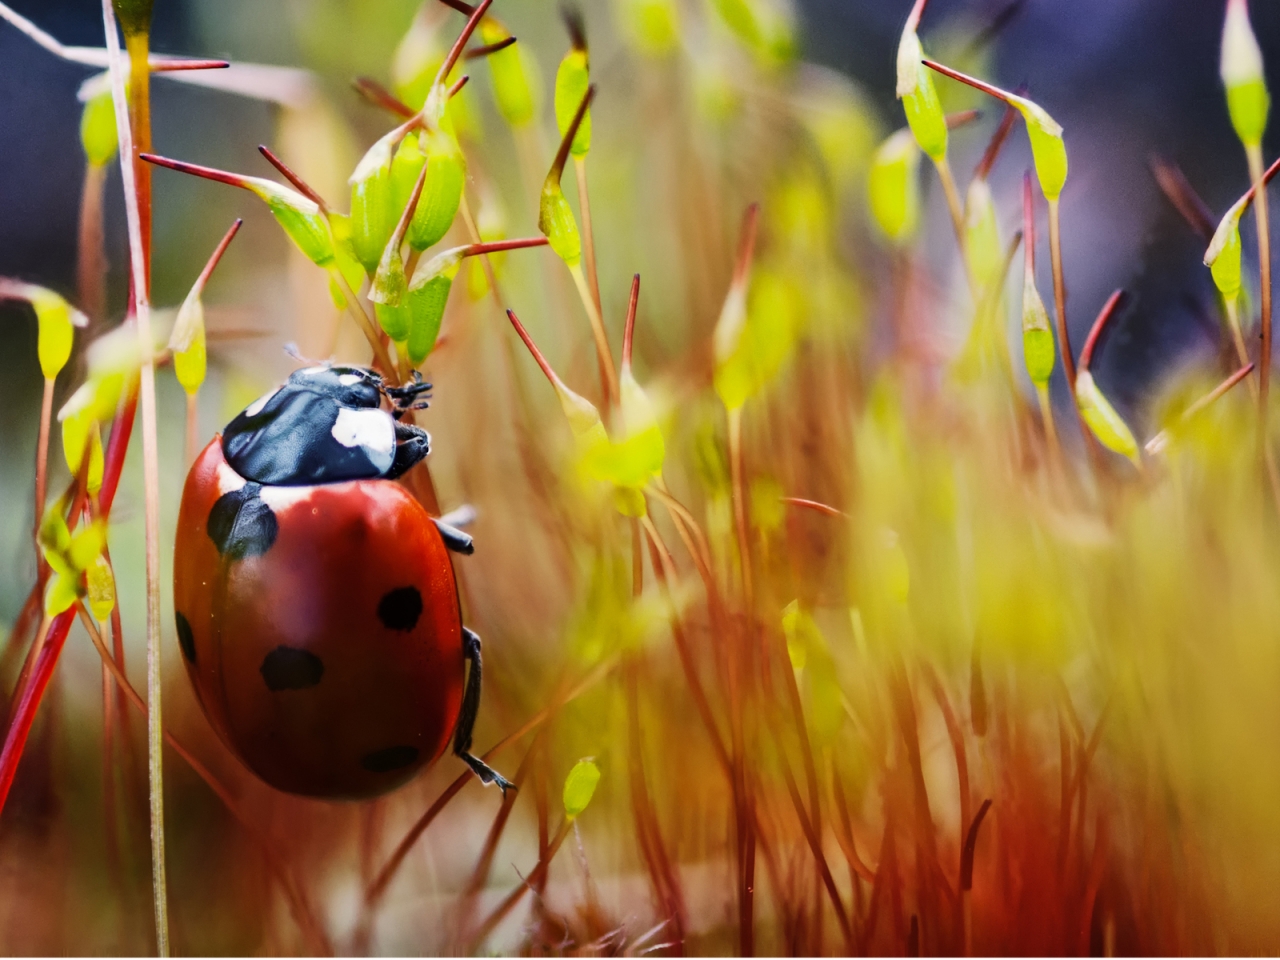 Red Ladybug Macro Photo for 1280 x 960 resolution